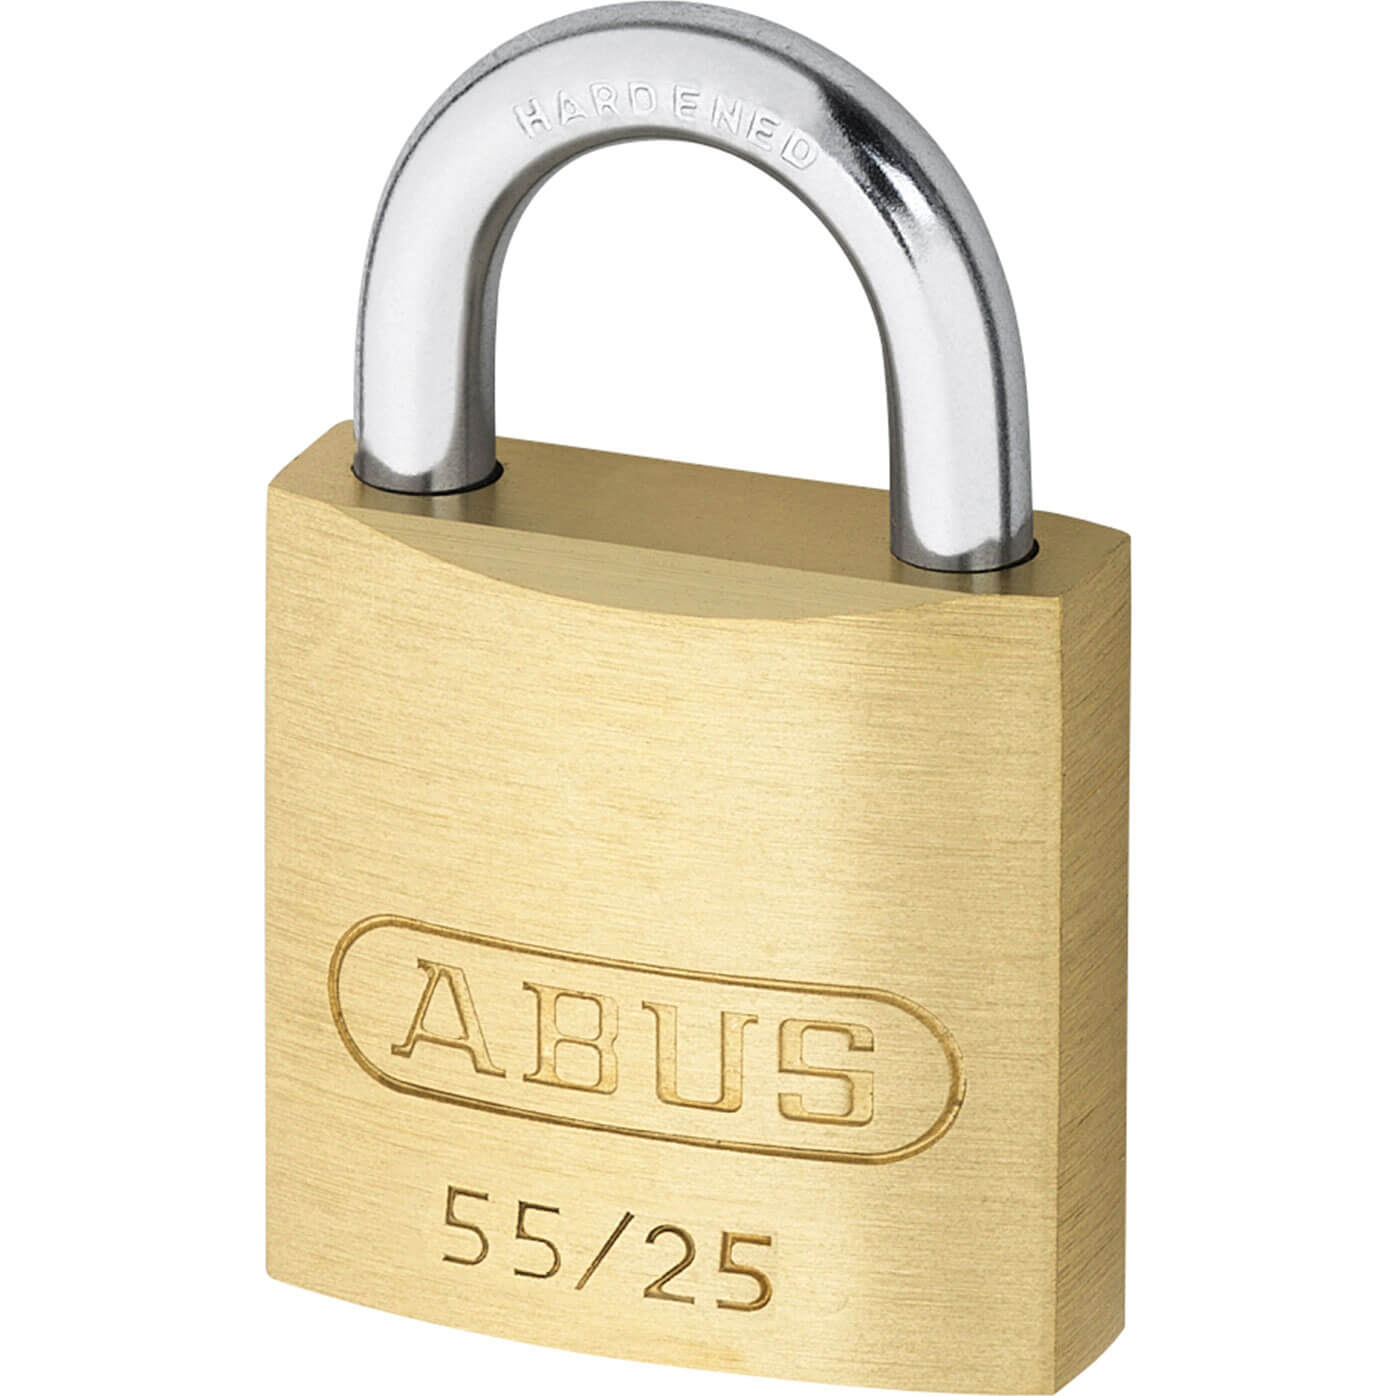 Image of Abus 55 Series Basic Brass Padlock 25mm Standard